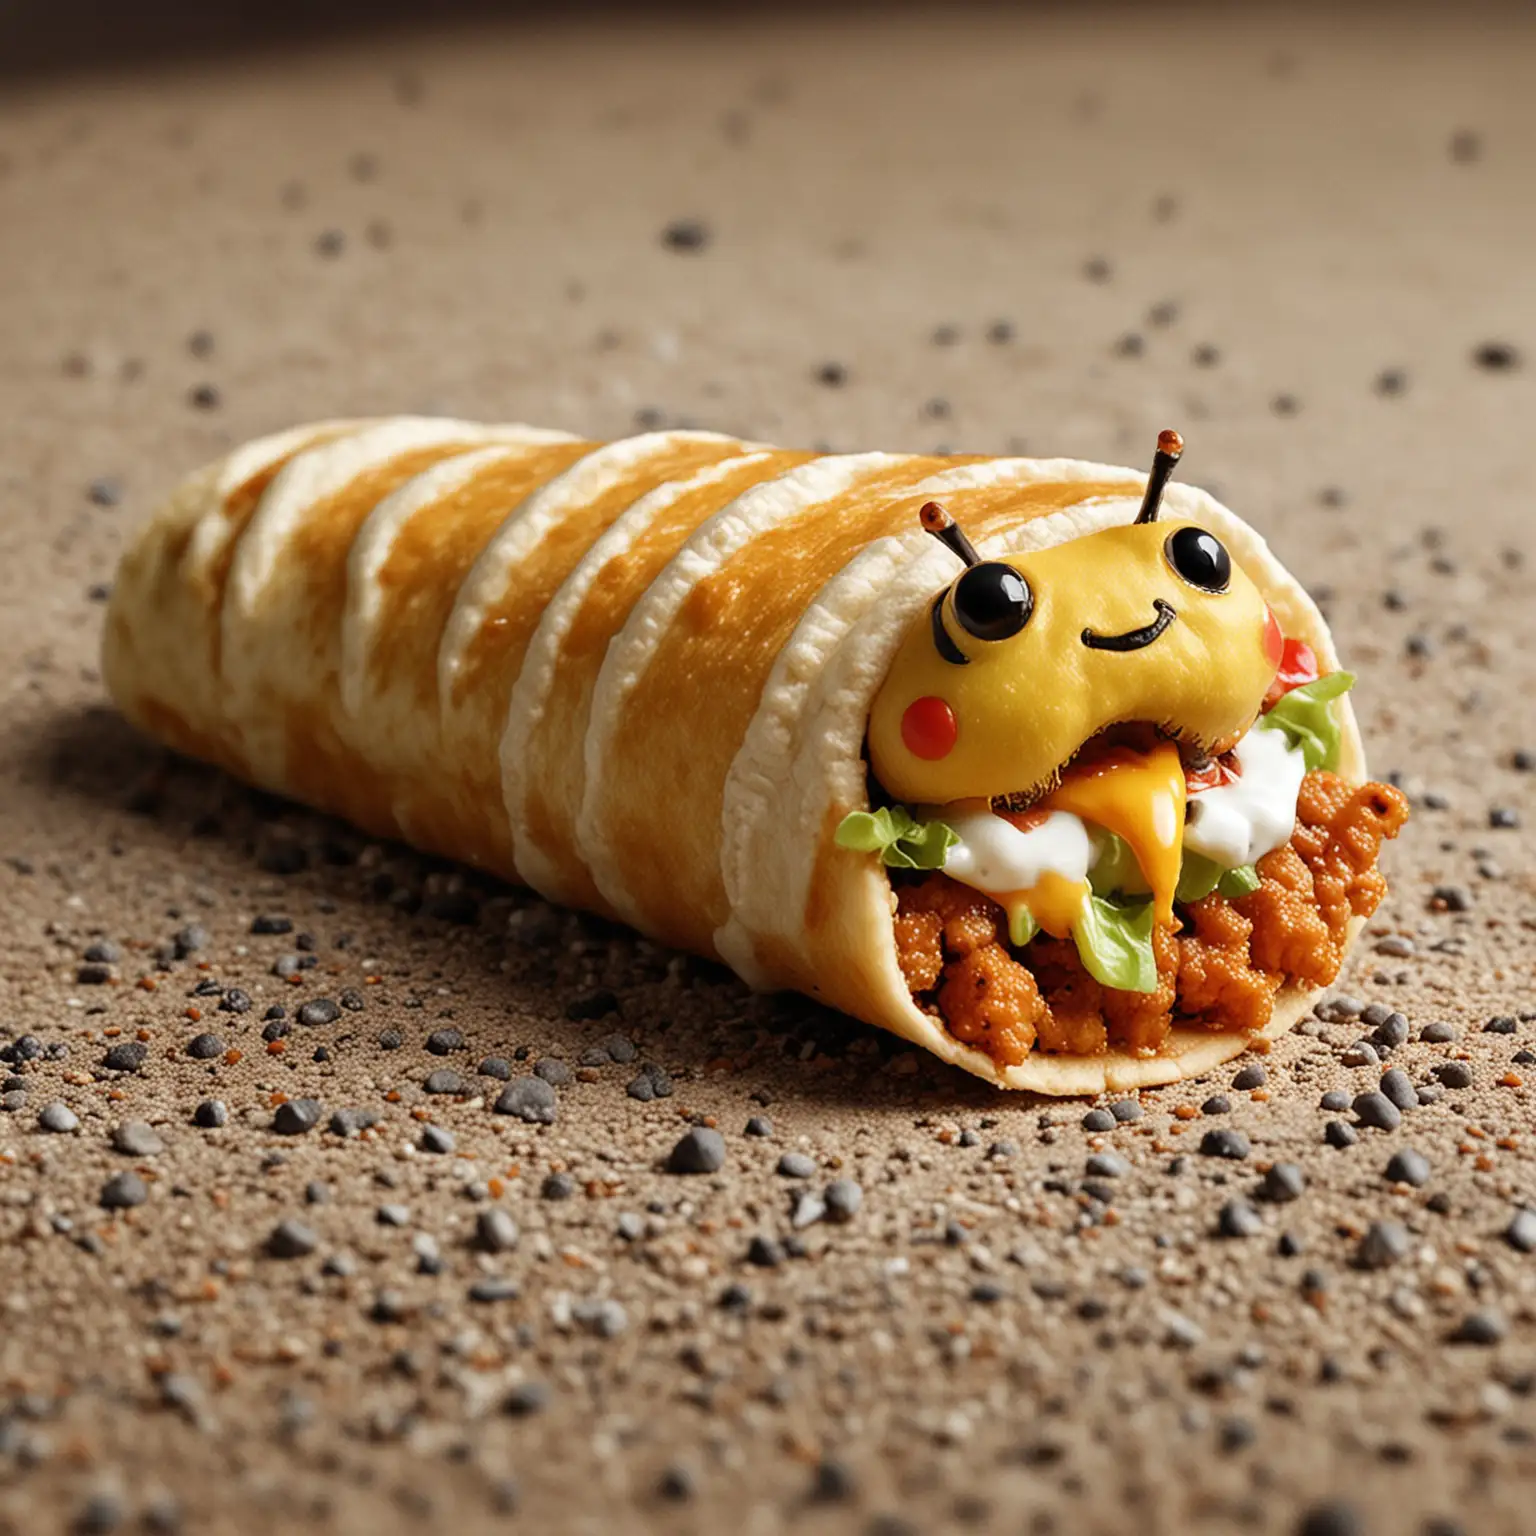 Adorable Caterpillar Enjoying a Taco Bell Feast